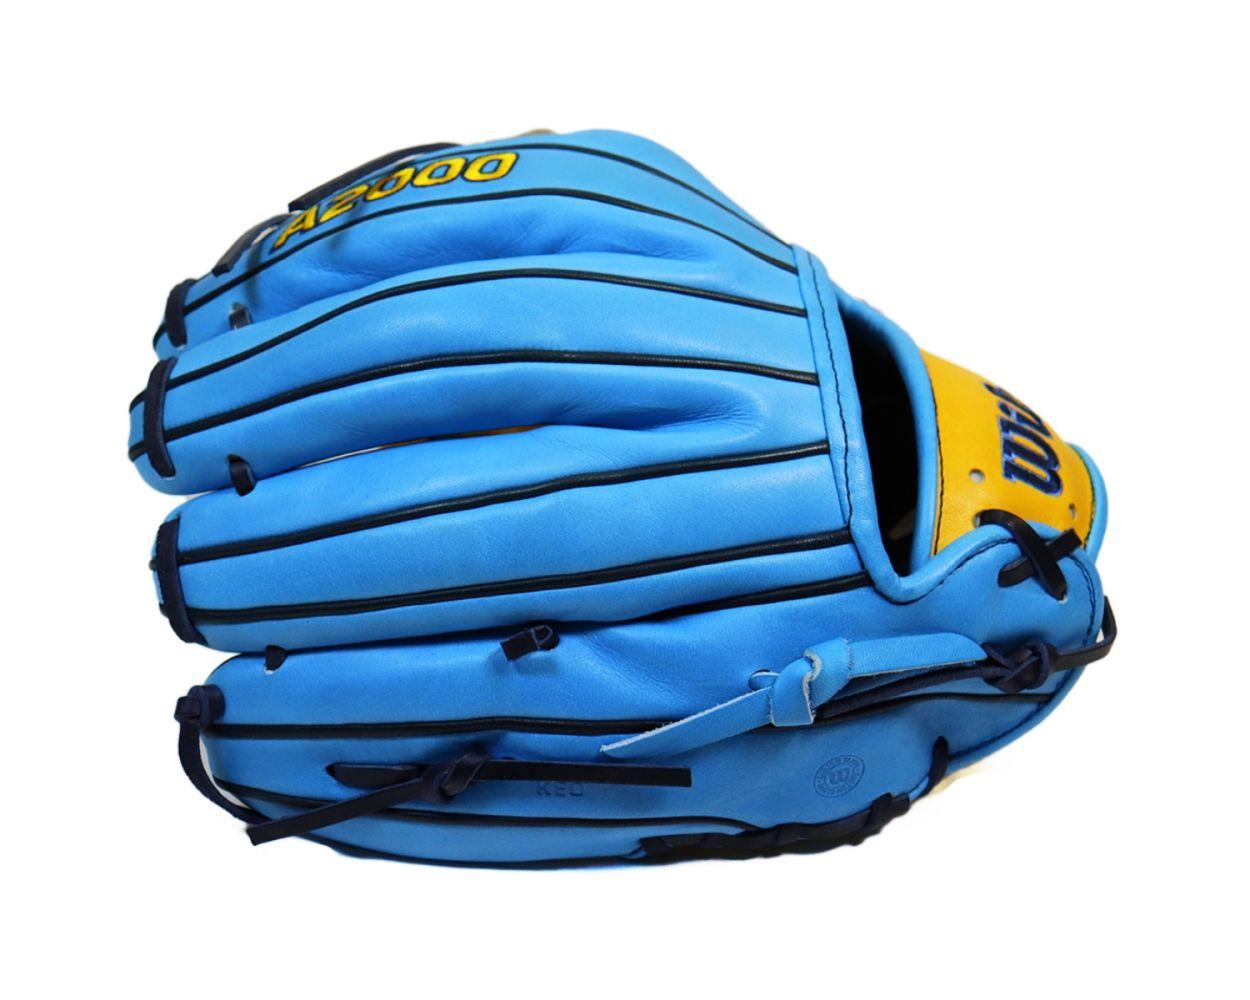 Wilson A2000 Sunray 11.5 Glove, Better Baseball